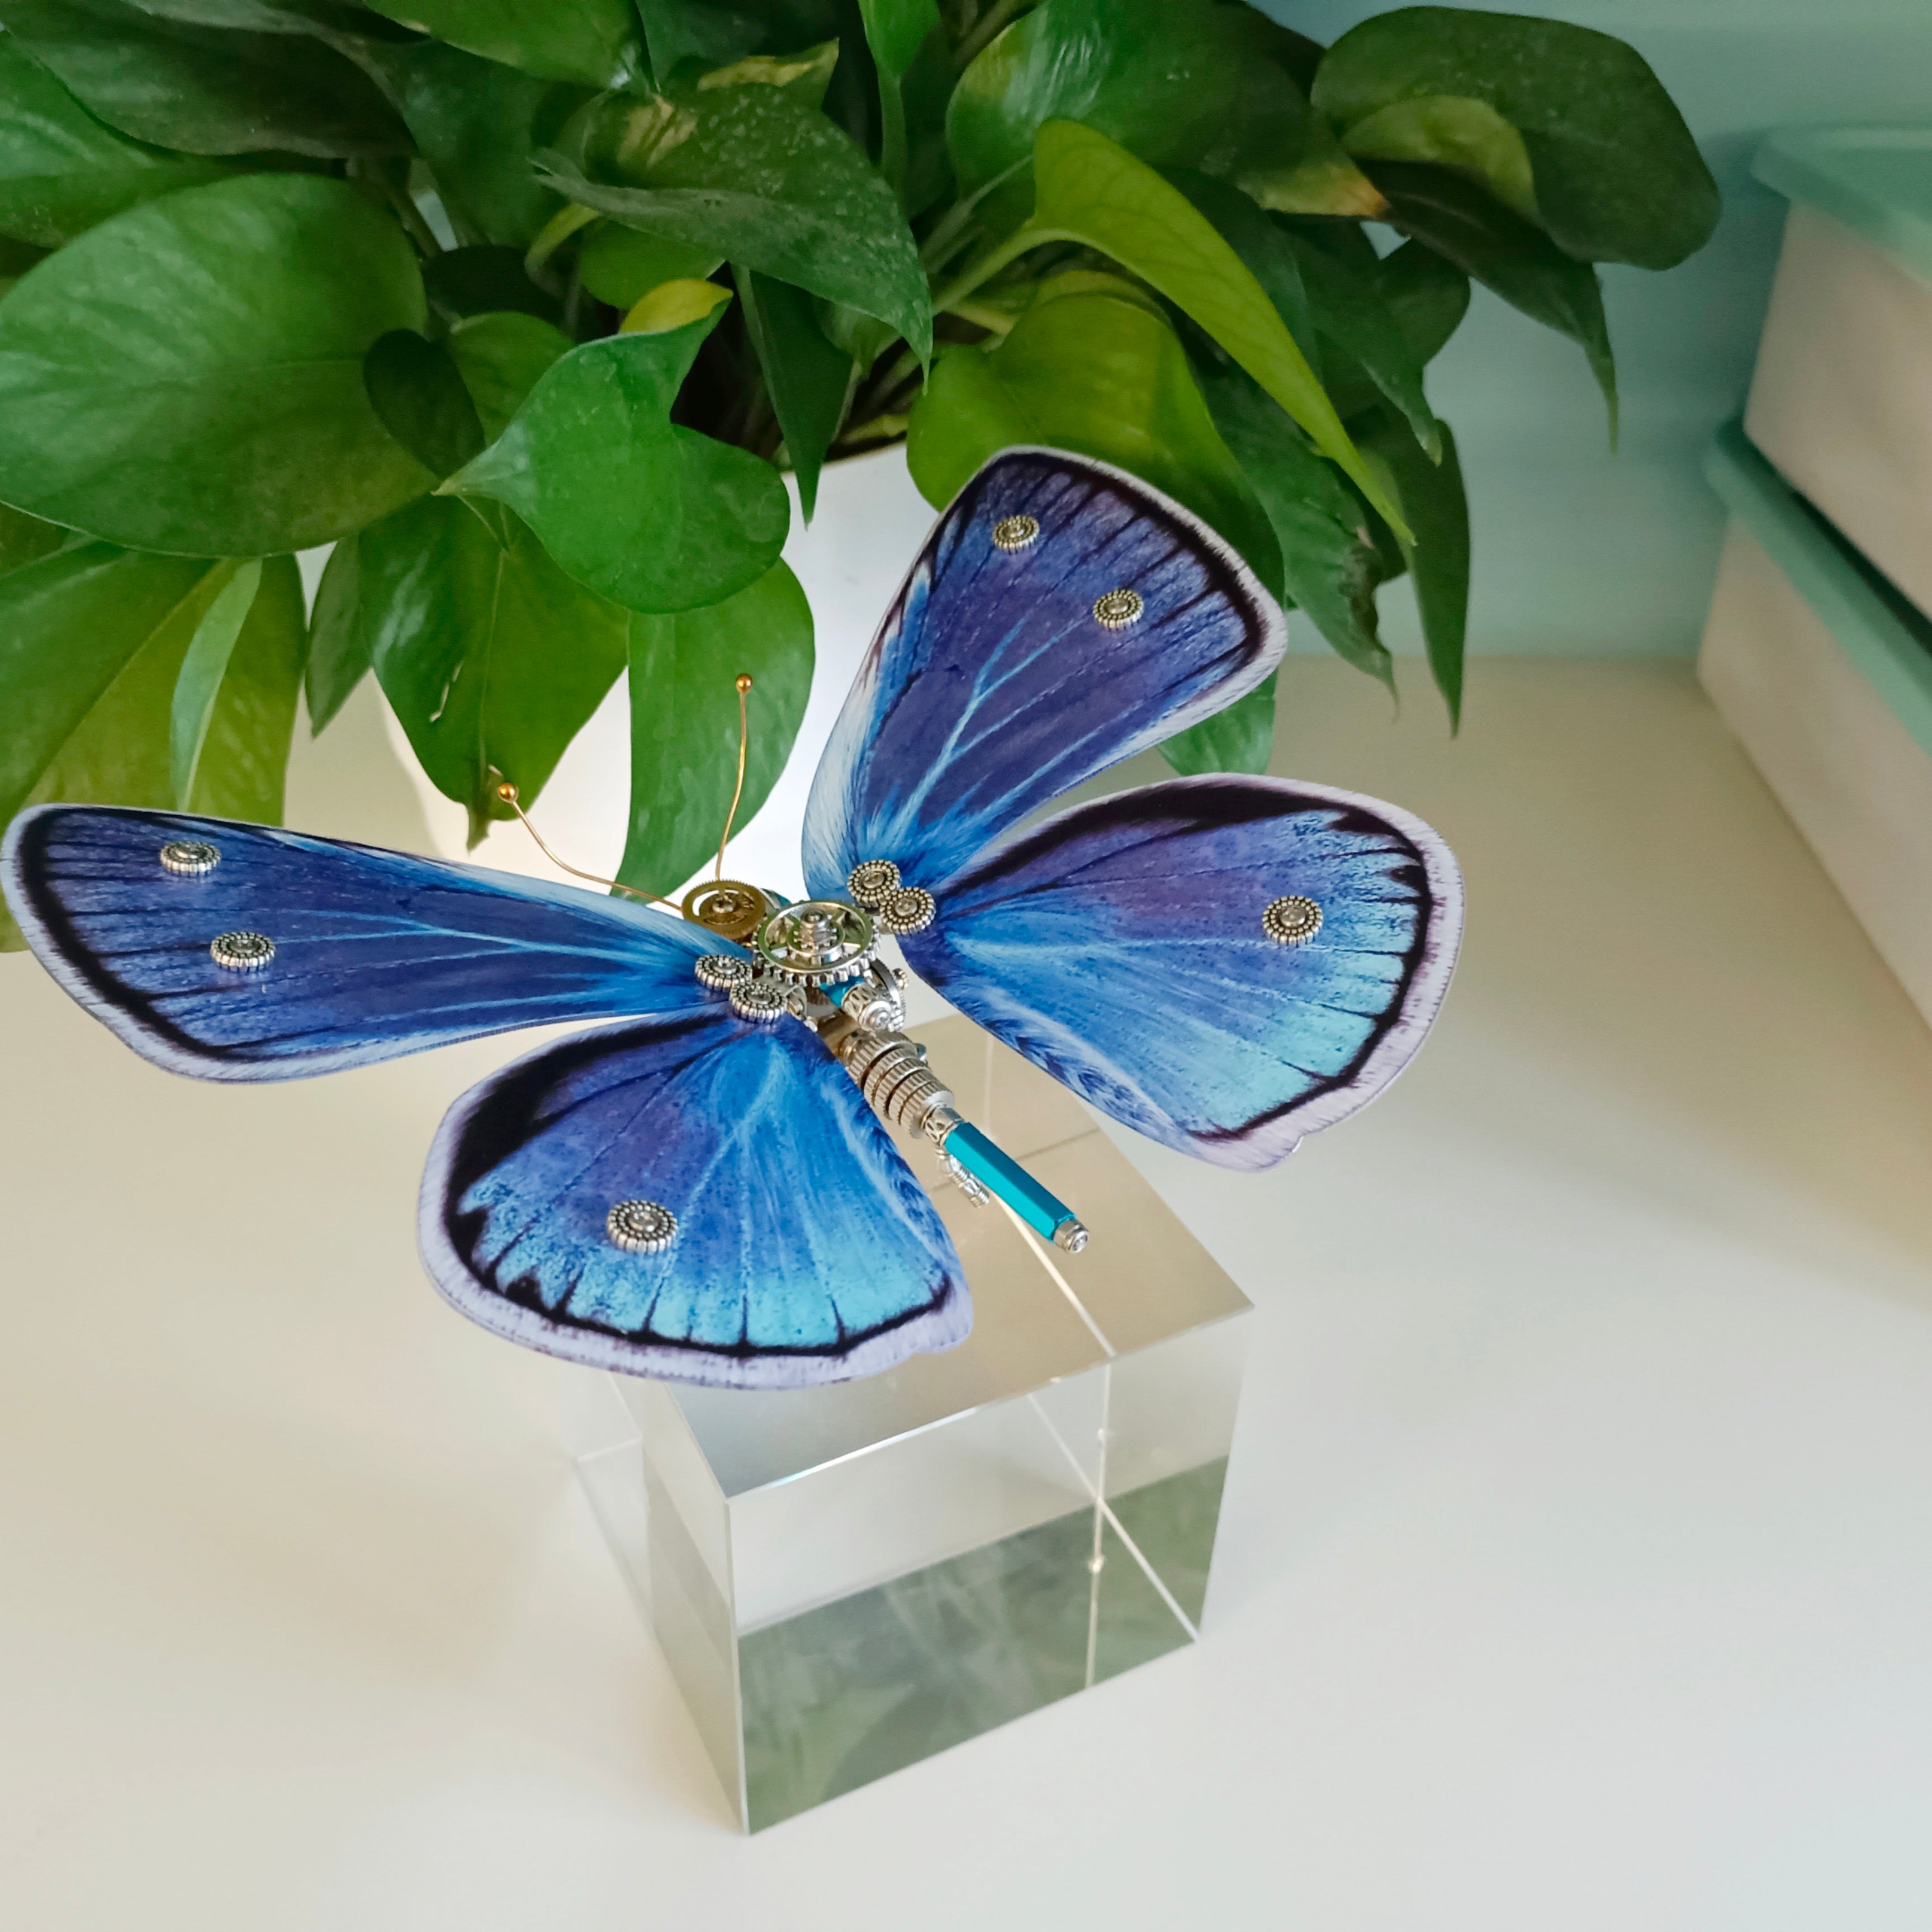 Steampunk Blue Morpho Butterfly 3D Metal Model Kits for Adults